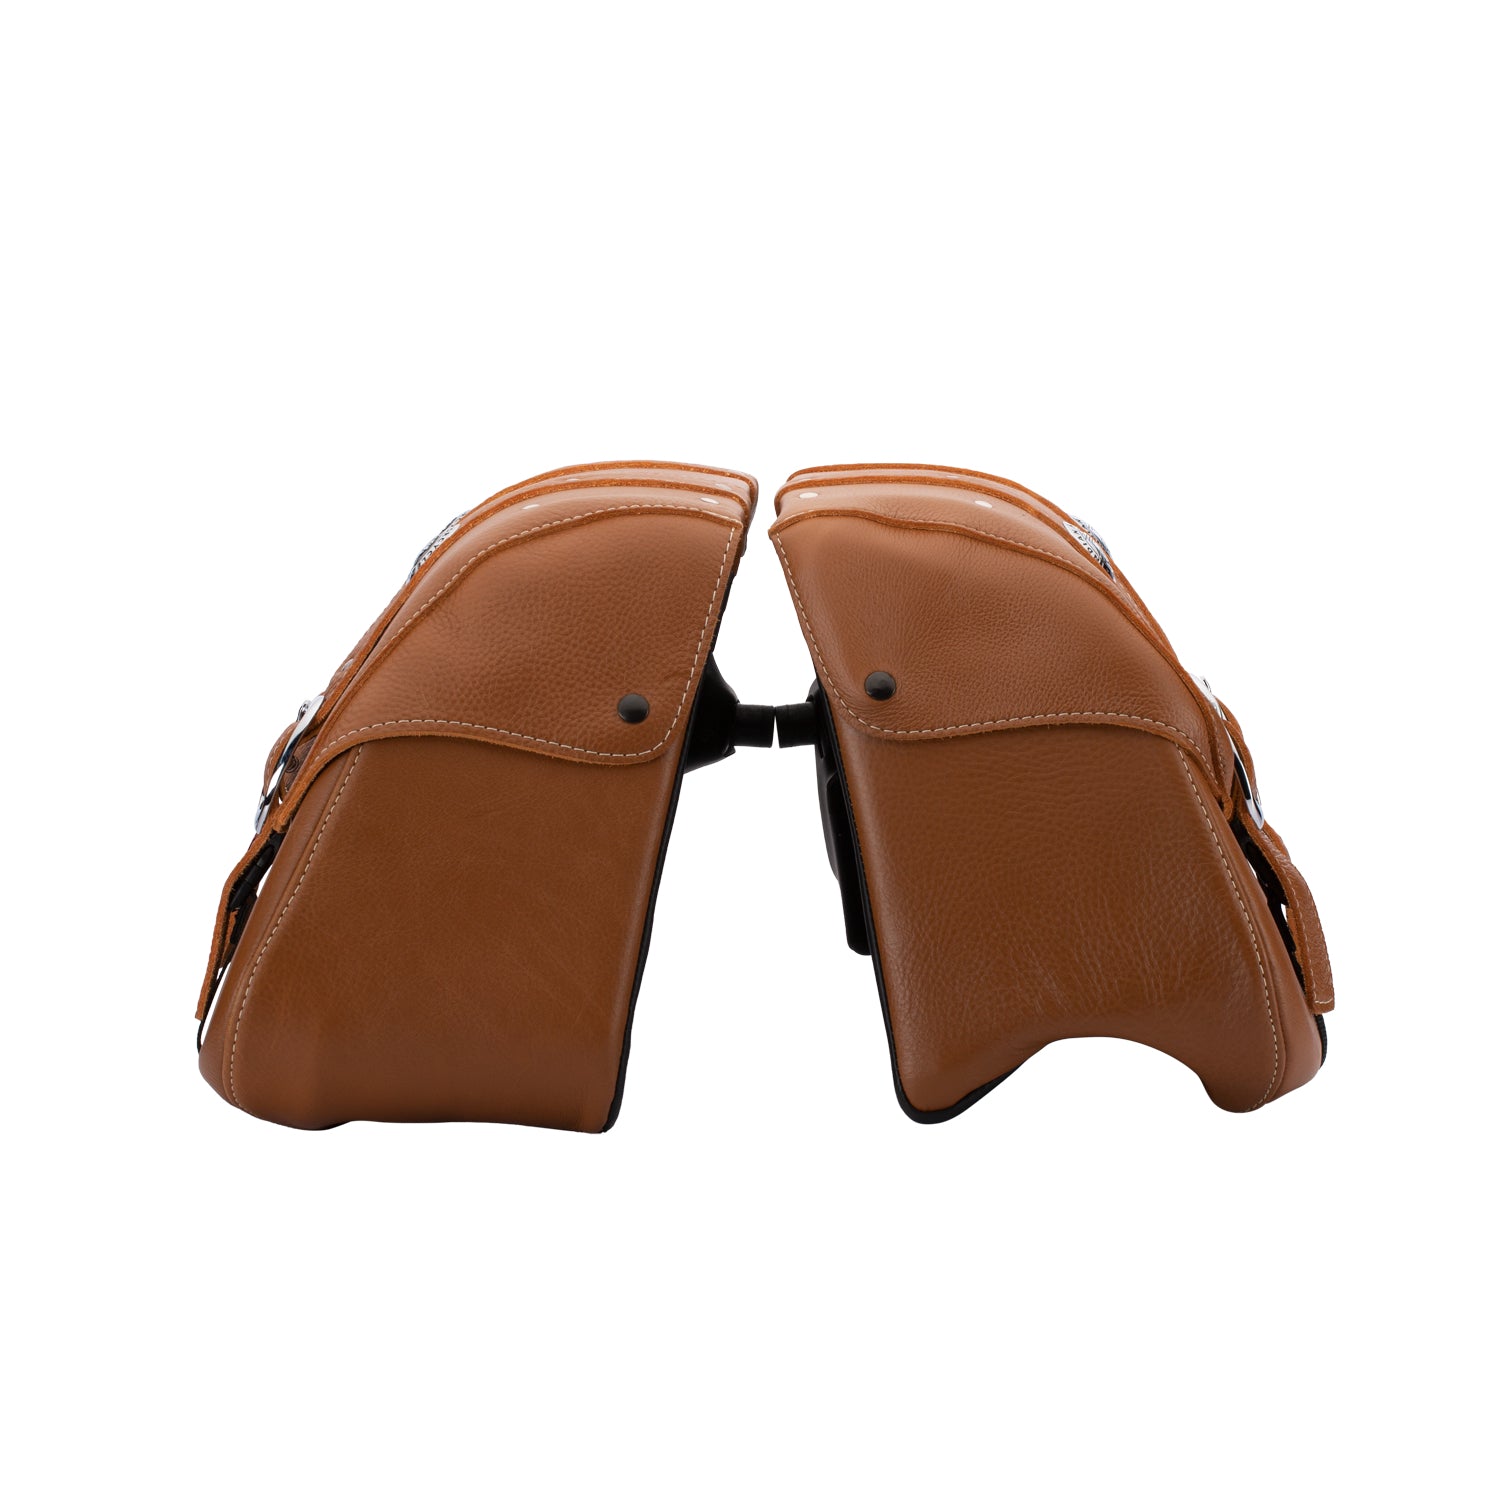 Genuine Leather Saddlebags, Desert Tan